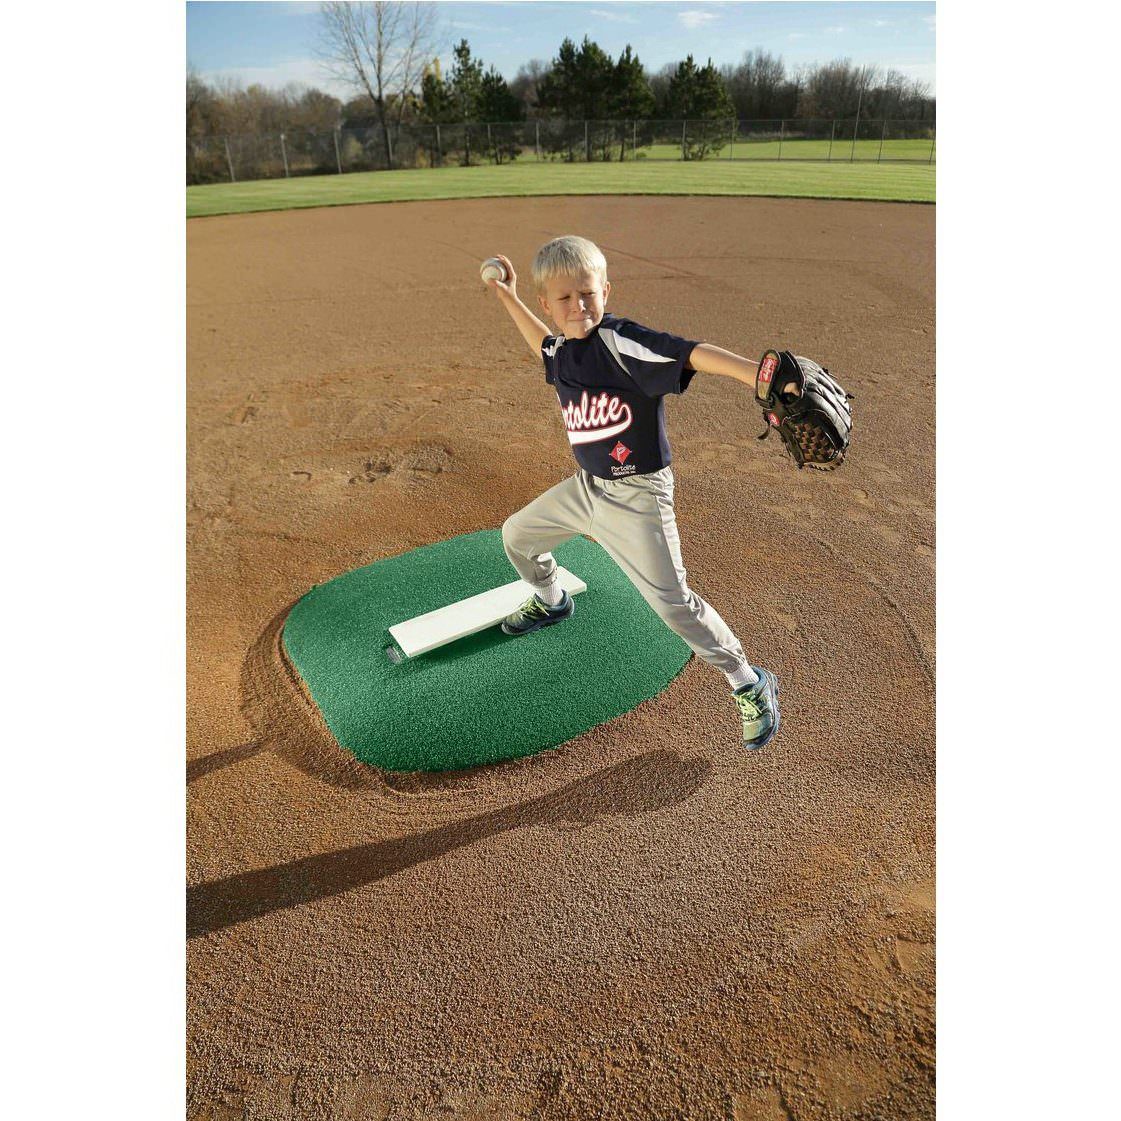 PortoLite 4" Youth Portable Baseball Pitching Mound green turf kid pitching front view